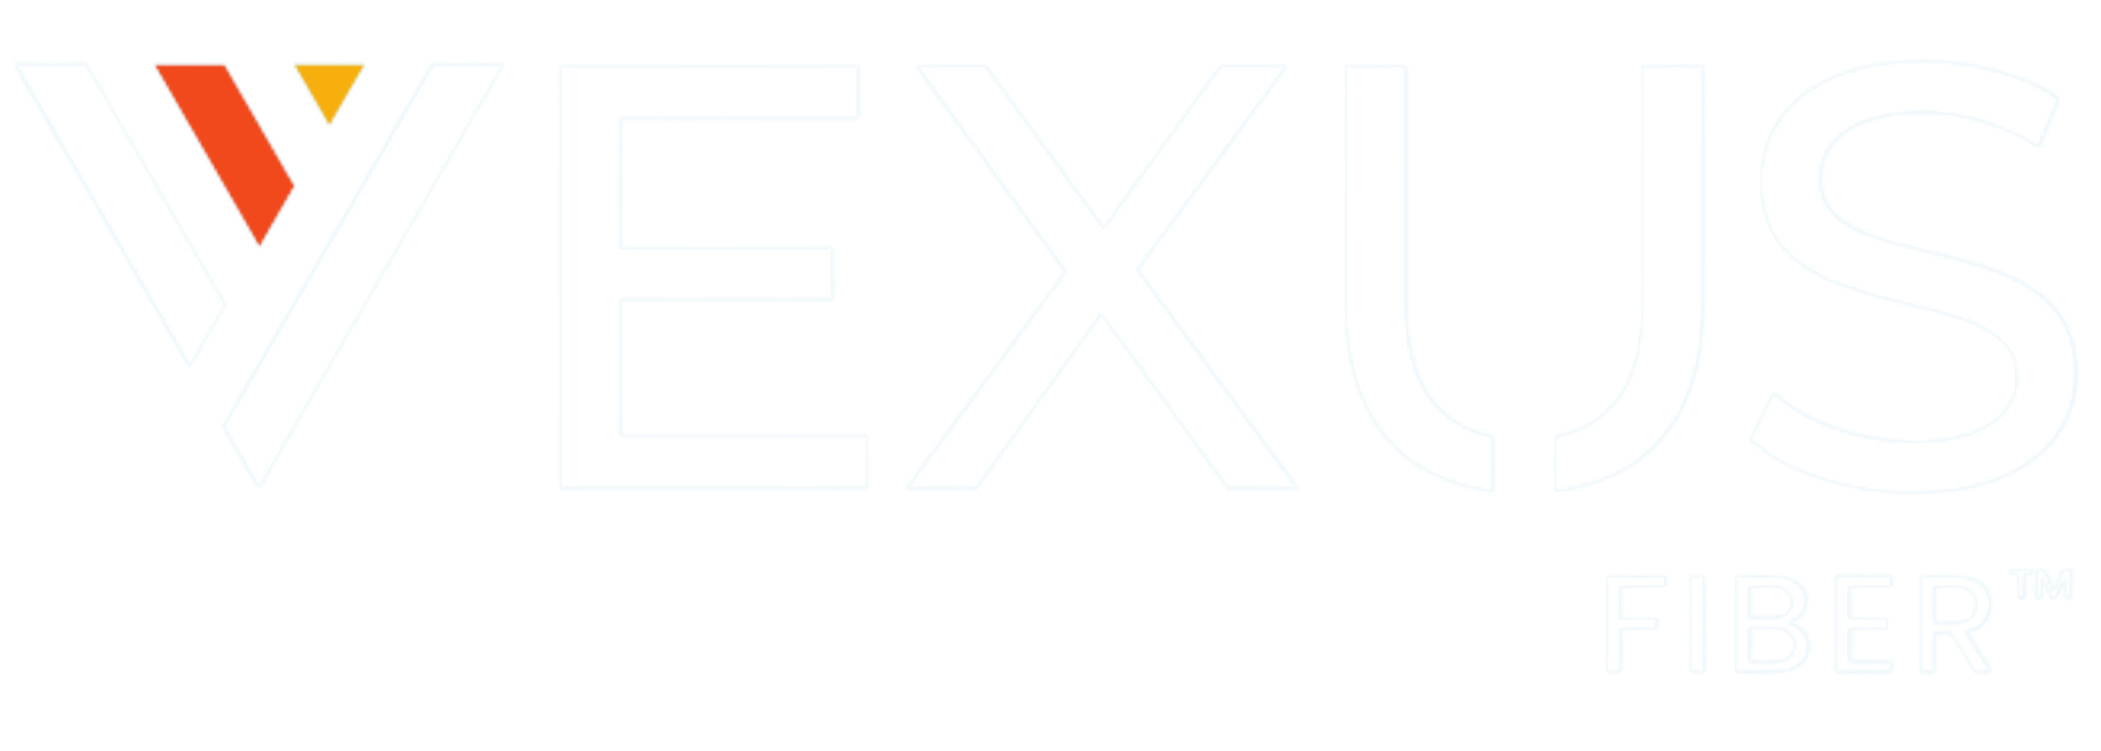 Vexus Fiber Logo | Vexus fiber is the leading fiber optic internet service provider in West Texas and Southern Louisiana